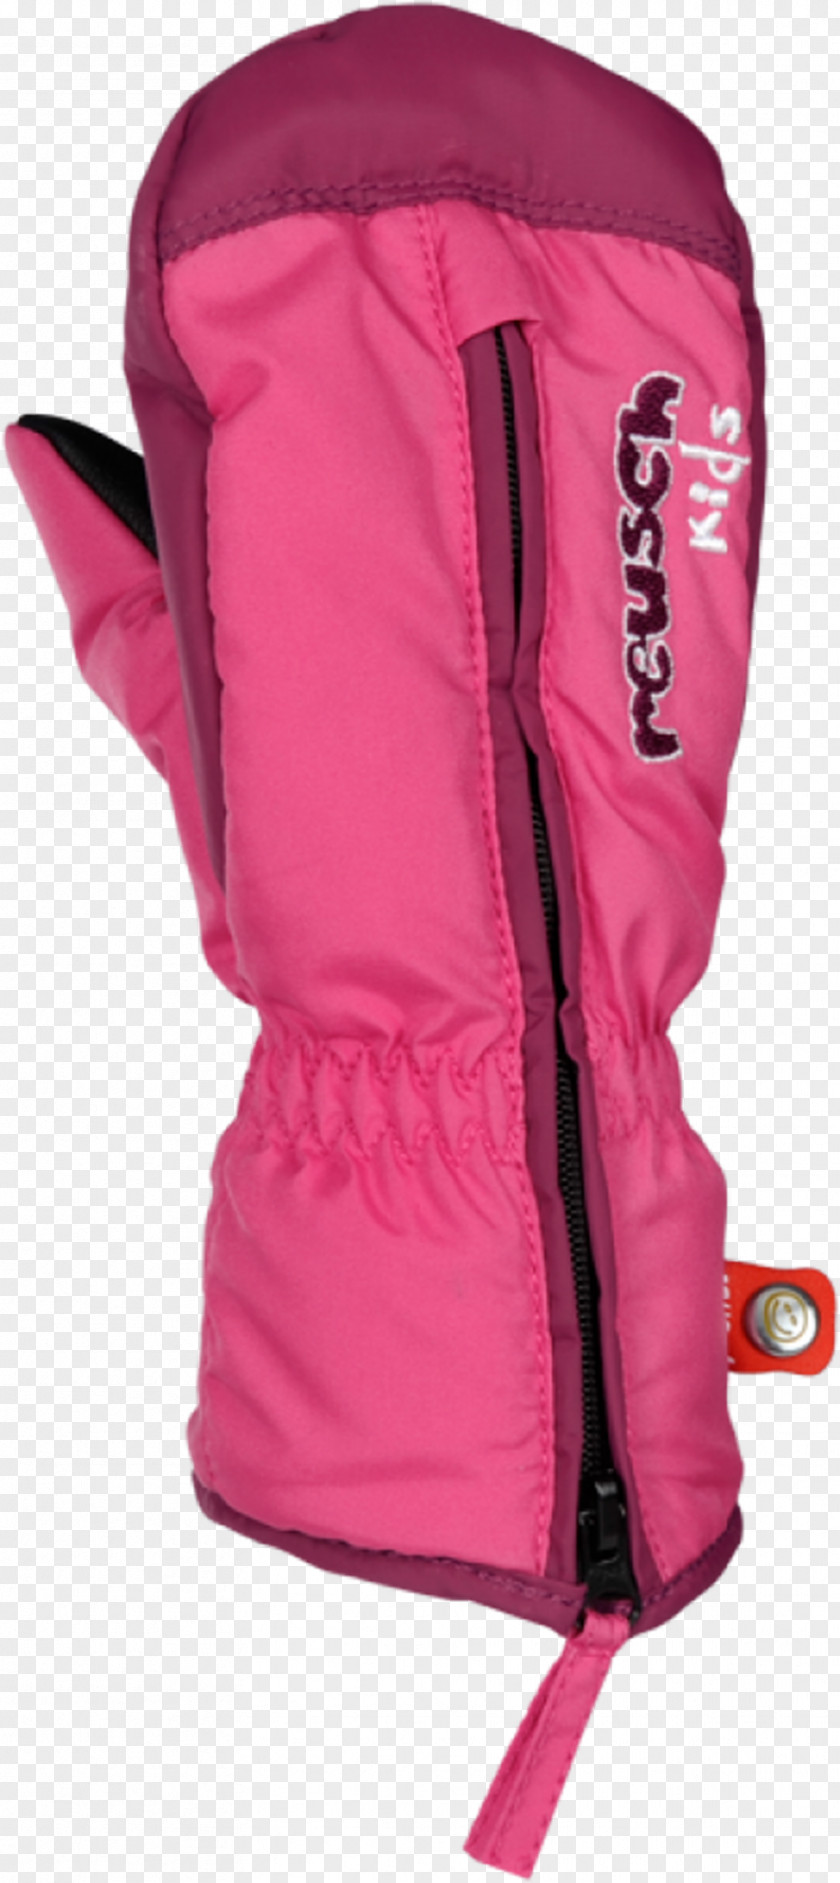 Click Free Shipping Reusch International Skiing Sports Glove Jacket PNG